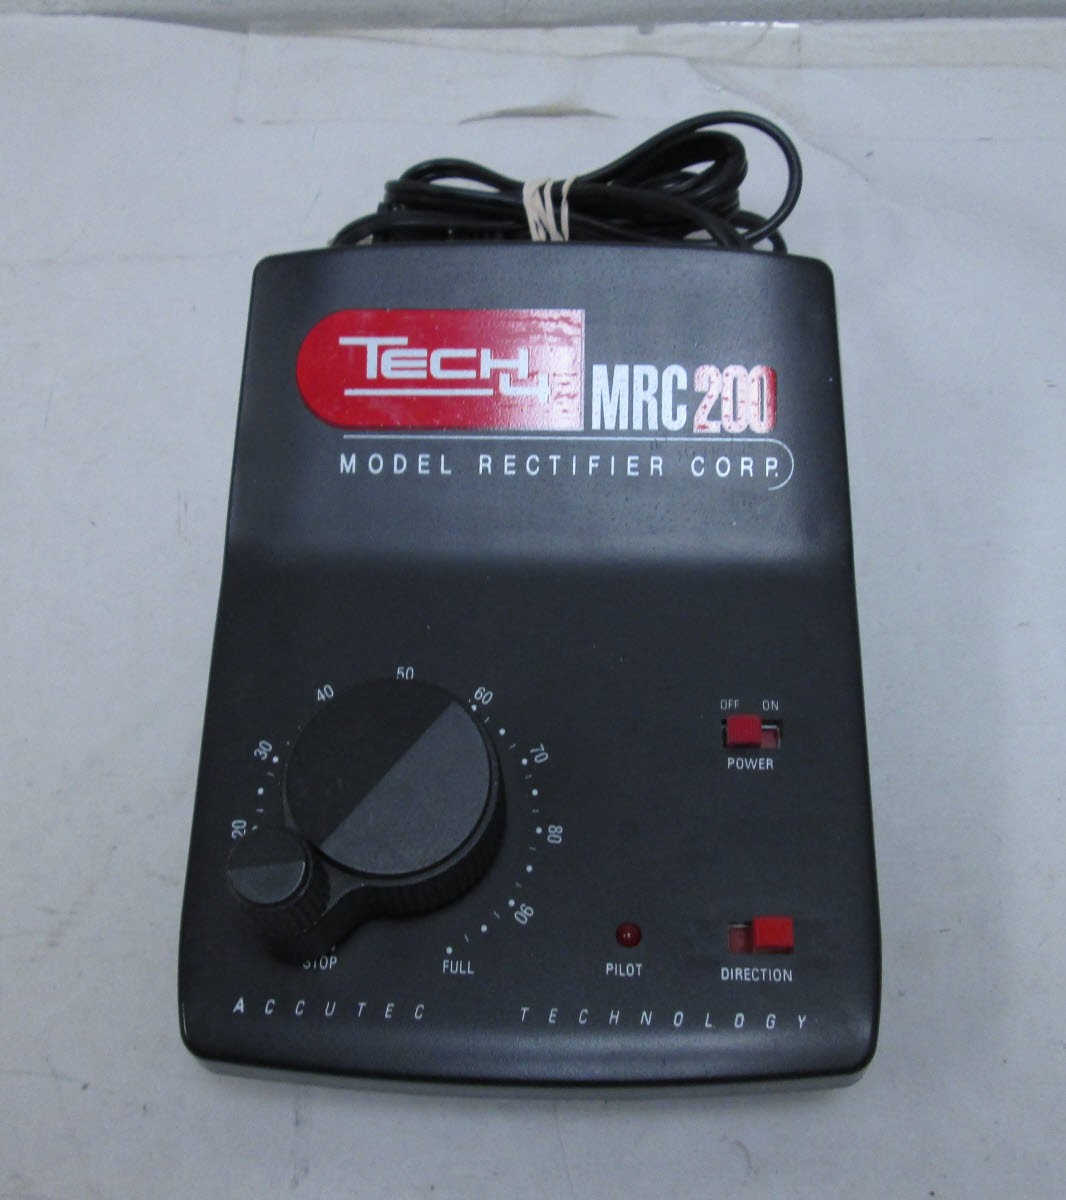 MRC 200 Tech 4 200 17VA Train Controller